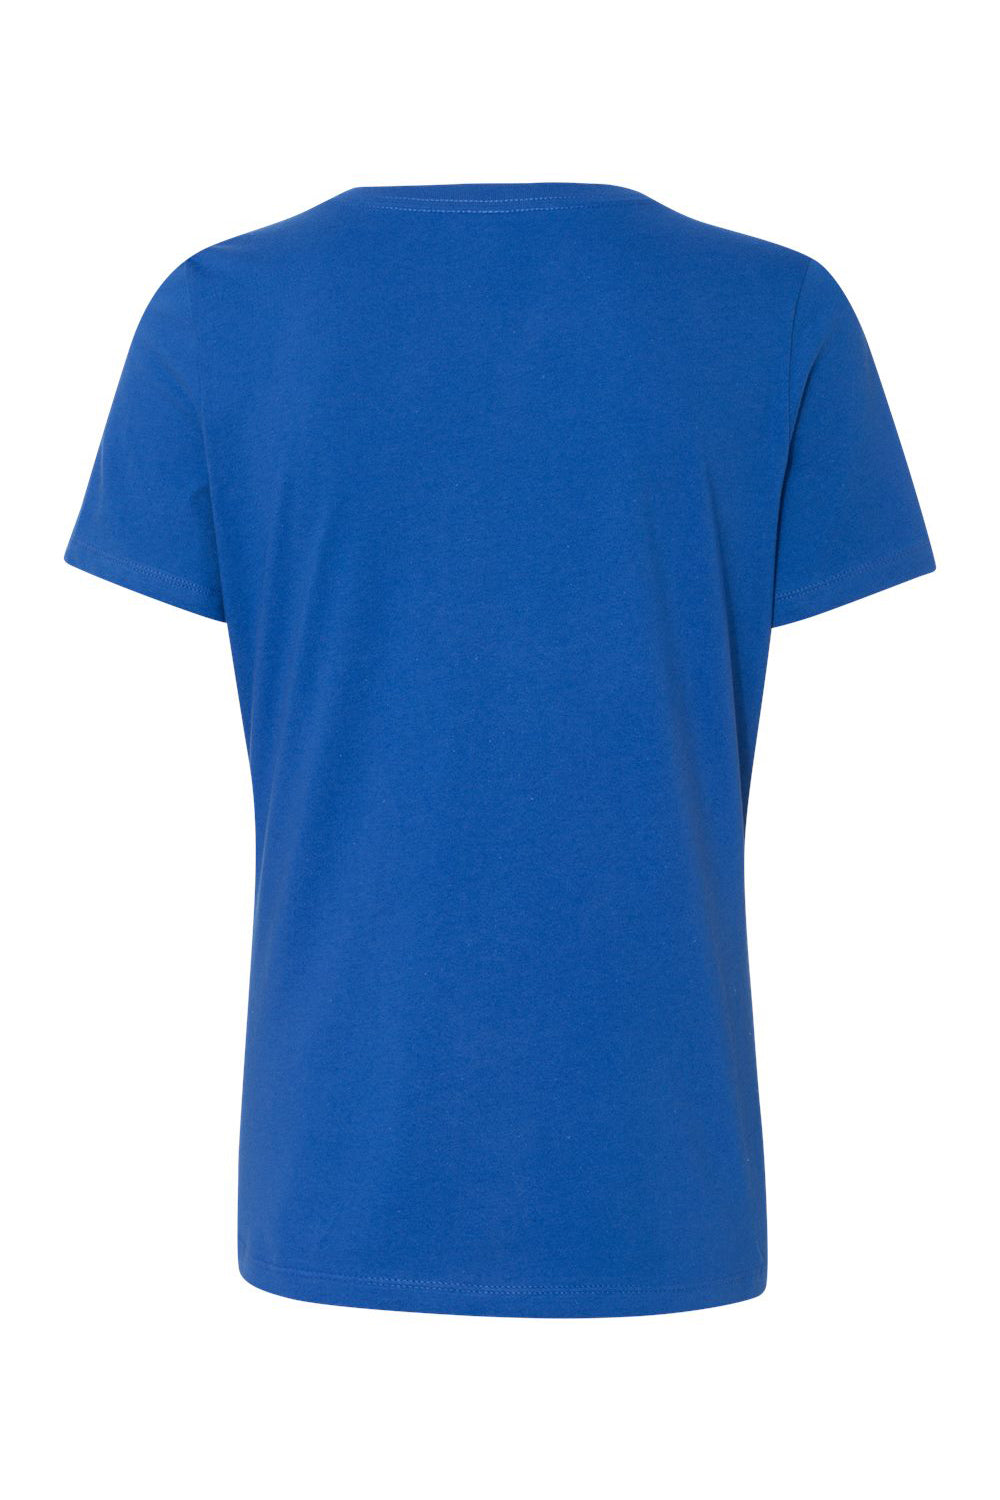 Bella + Canvas BC6405/6405 Womens Relaxed Jersey Short Sleeve V-Neck T-Shirt True Royal Blue Flat Back